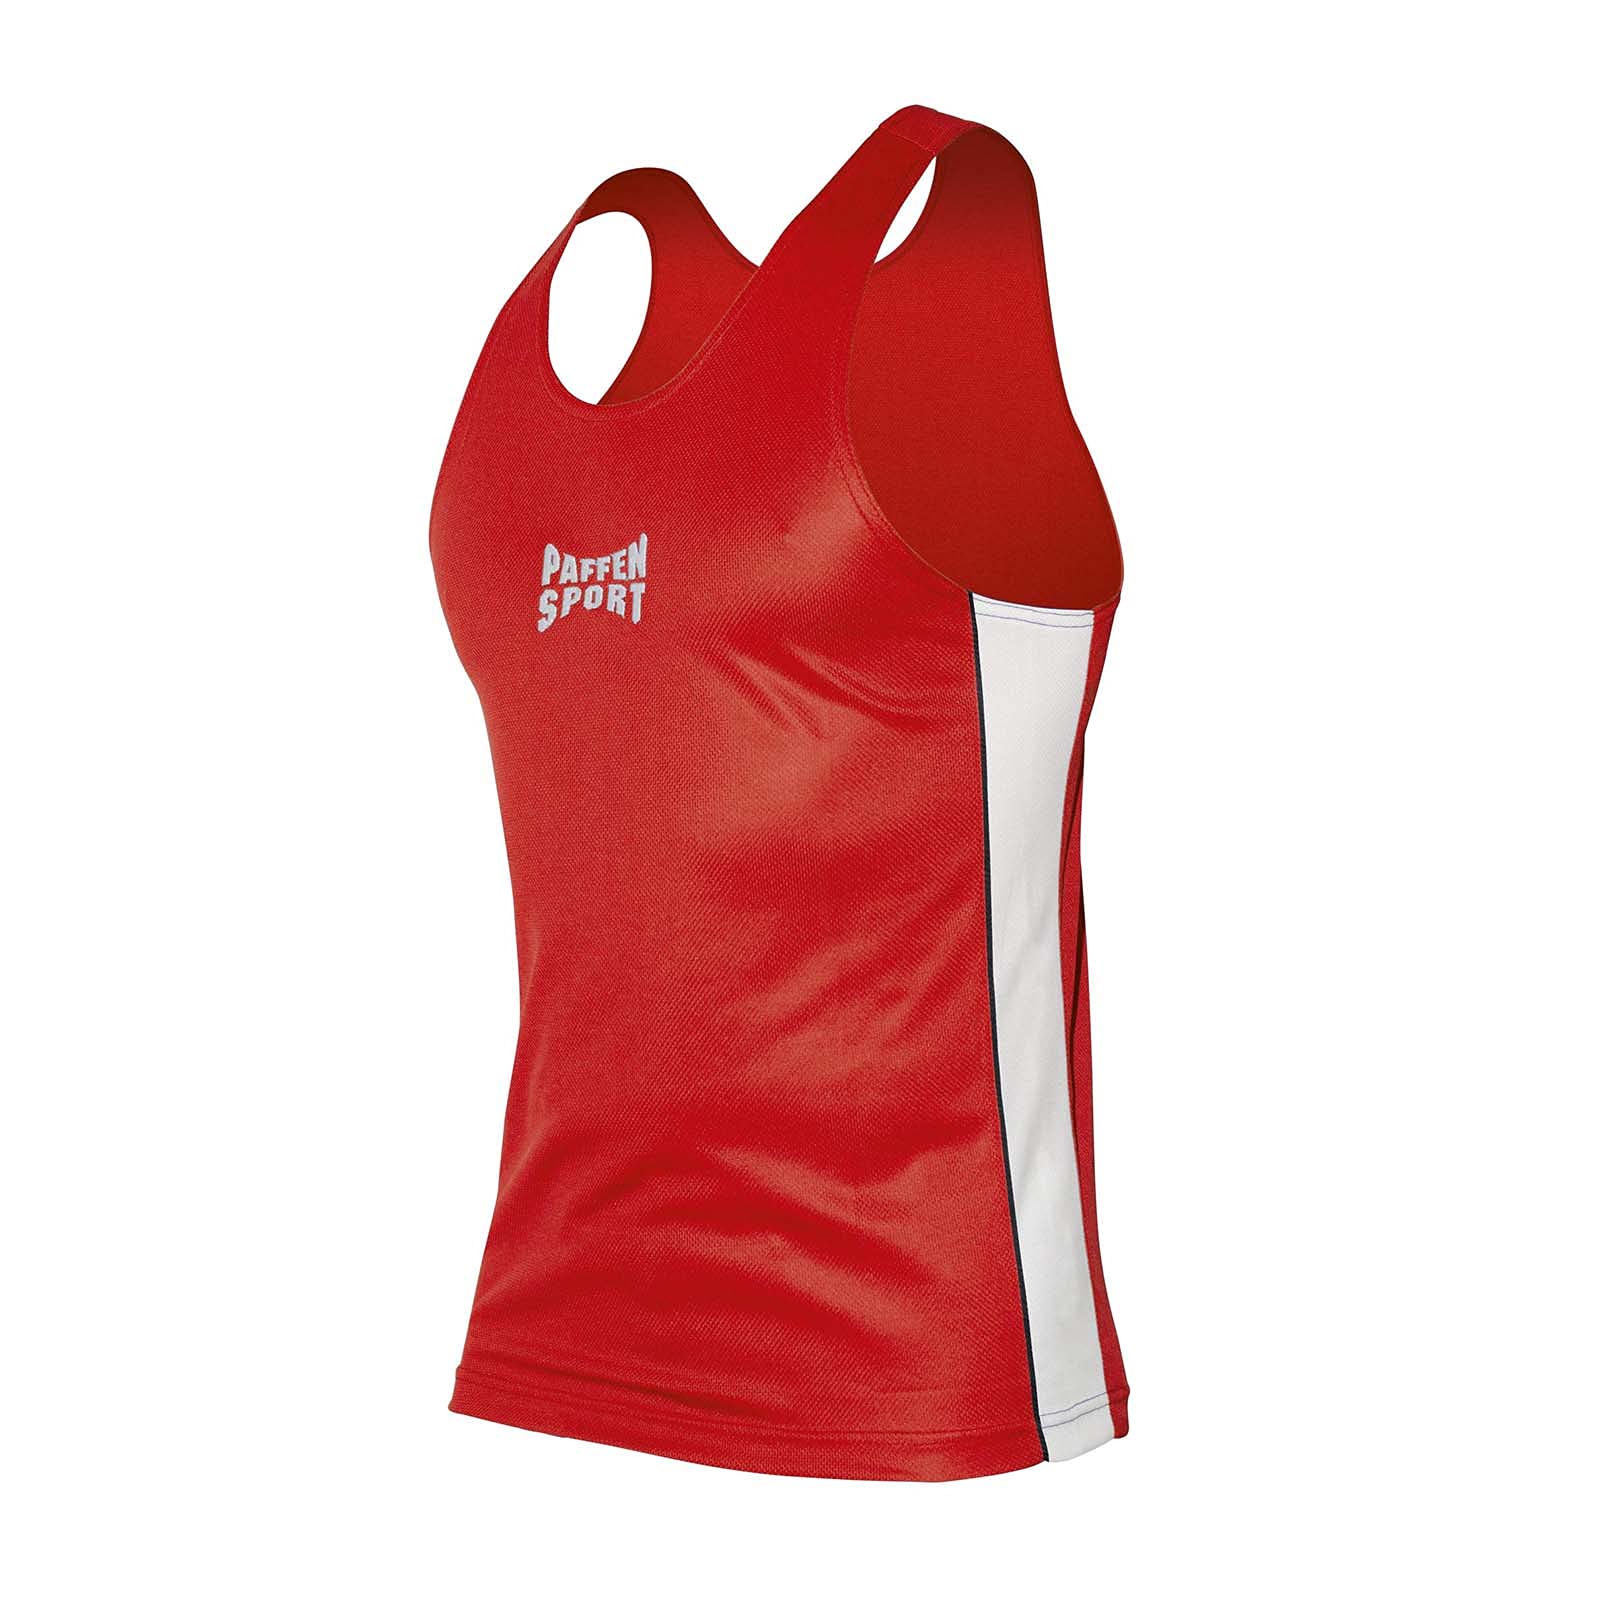 PAFFEN SPORT Contest Boxerhemd; rot/weiß; GR: M